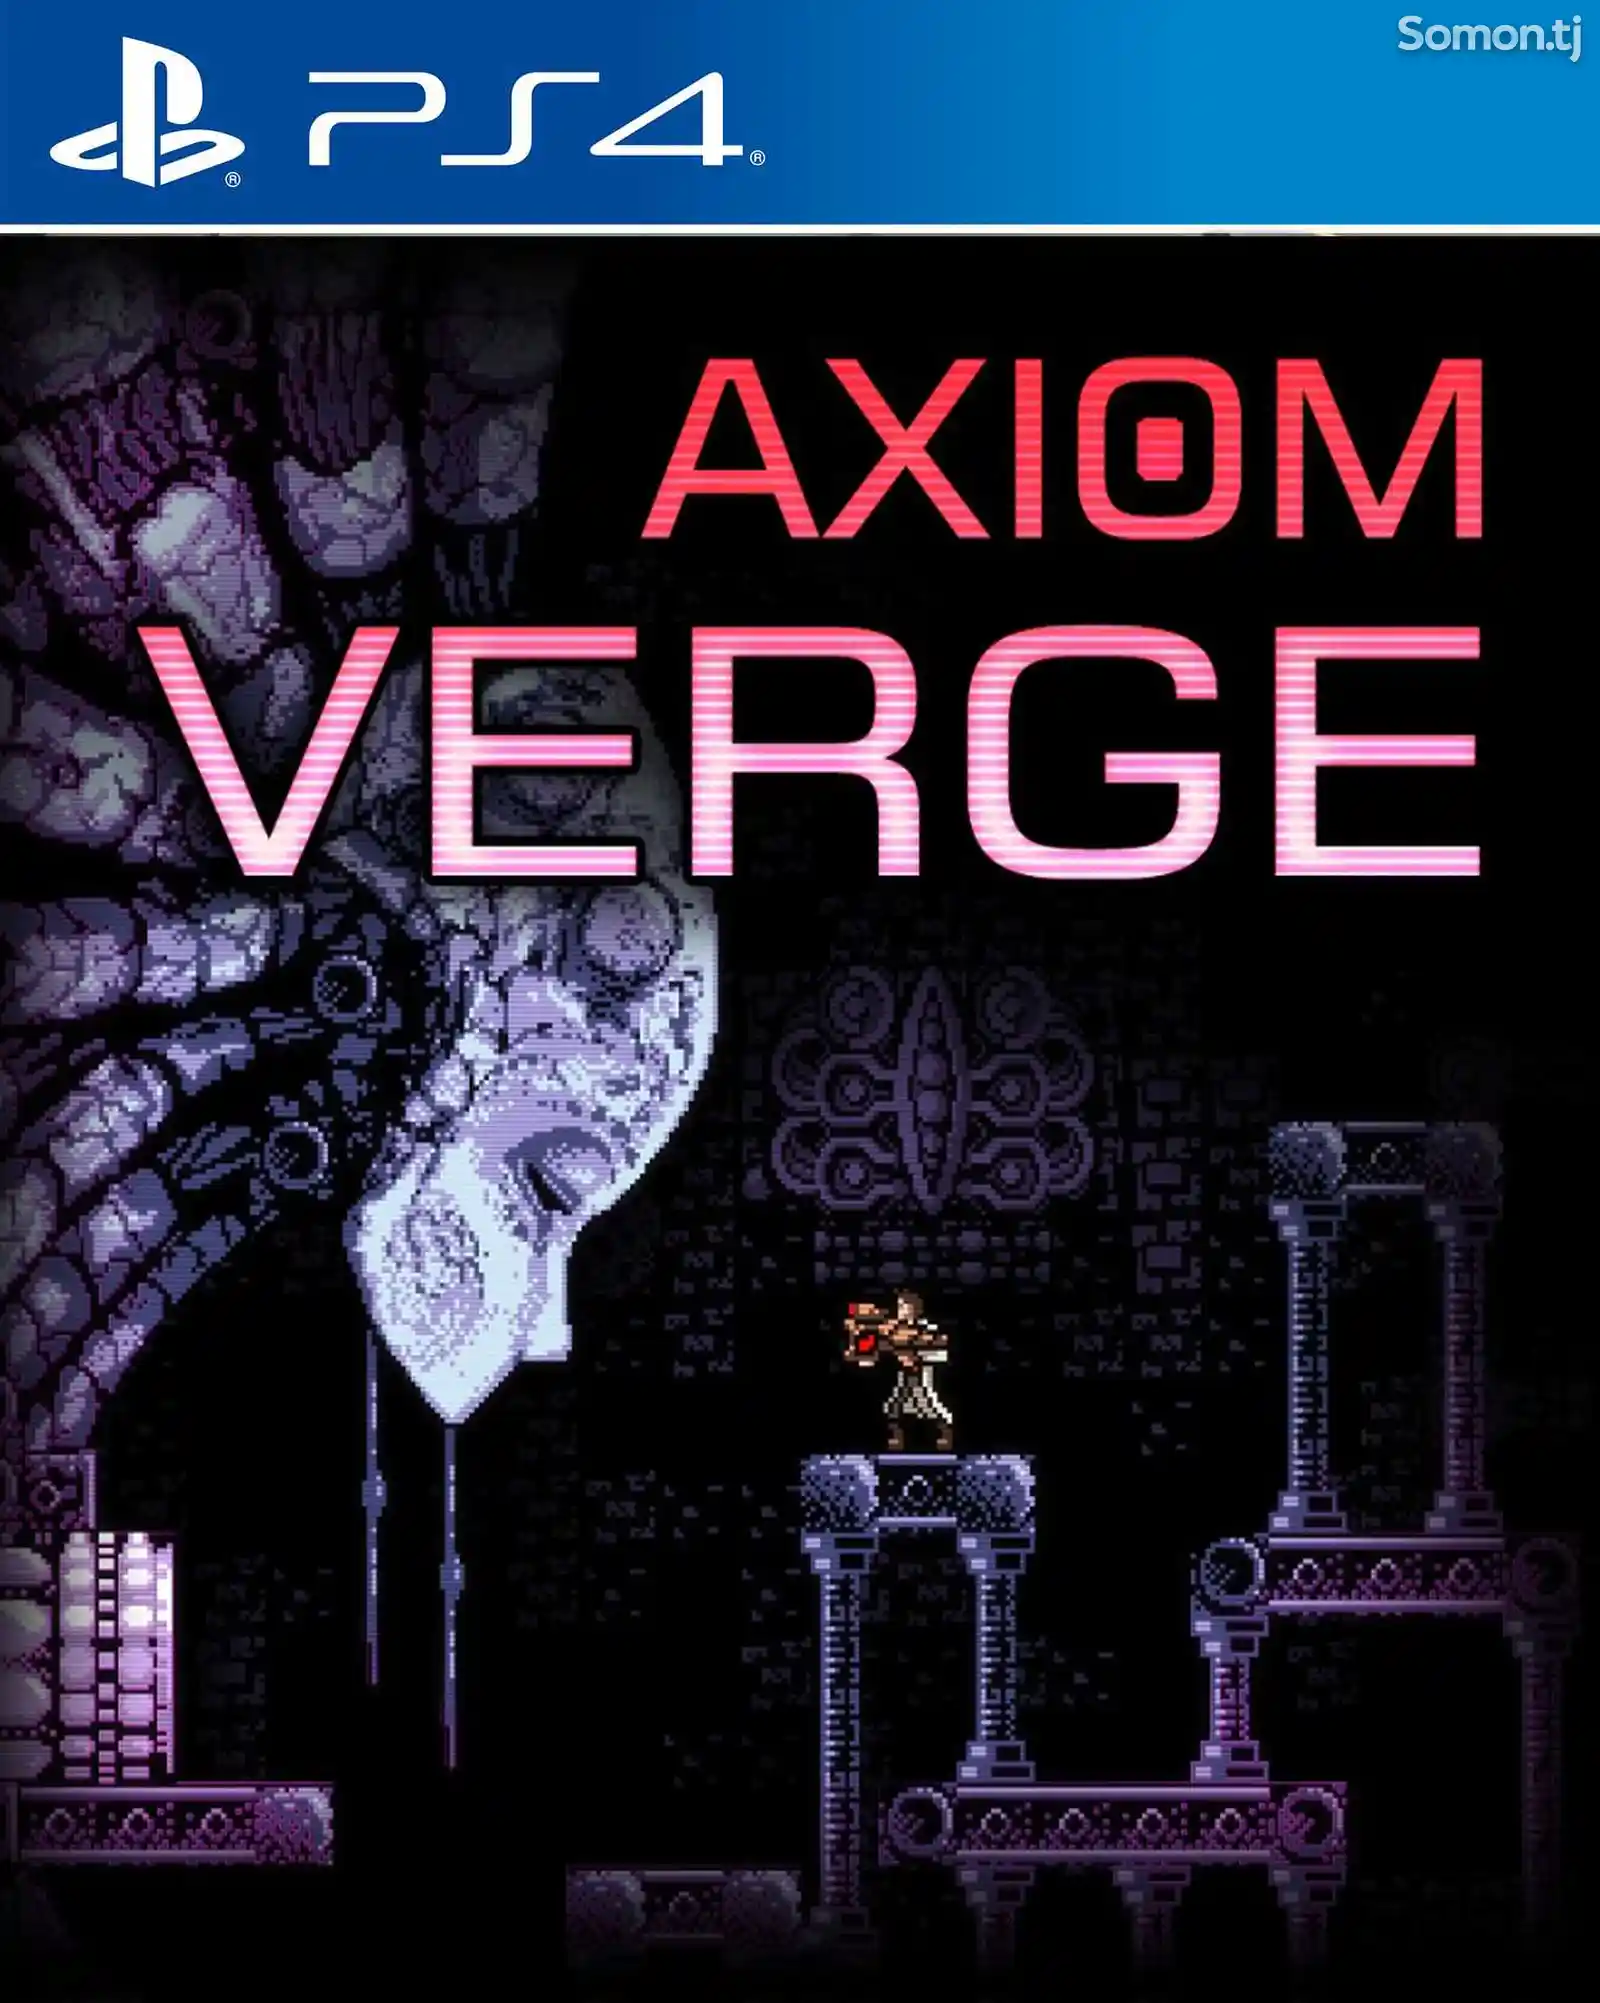 Игра Axiom verge для PS-4 / 5.05 / 6.72 / 7.02 / 7.55 / 9.00 /-1